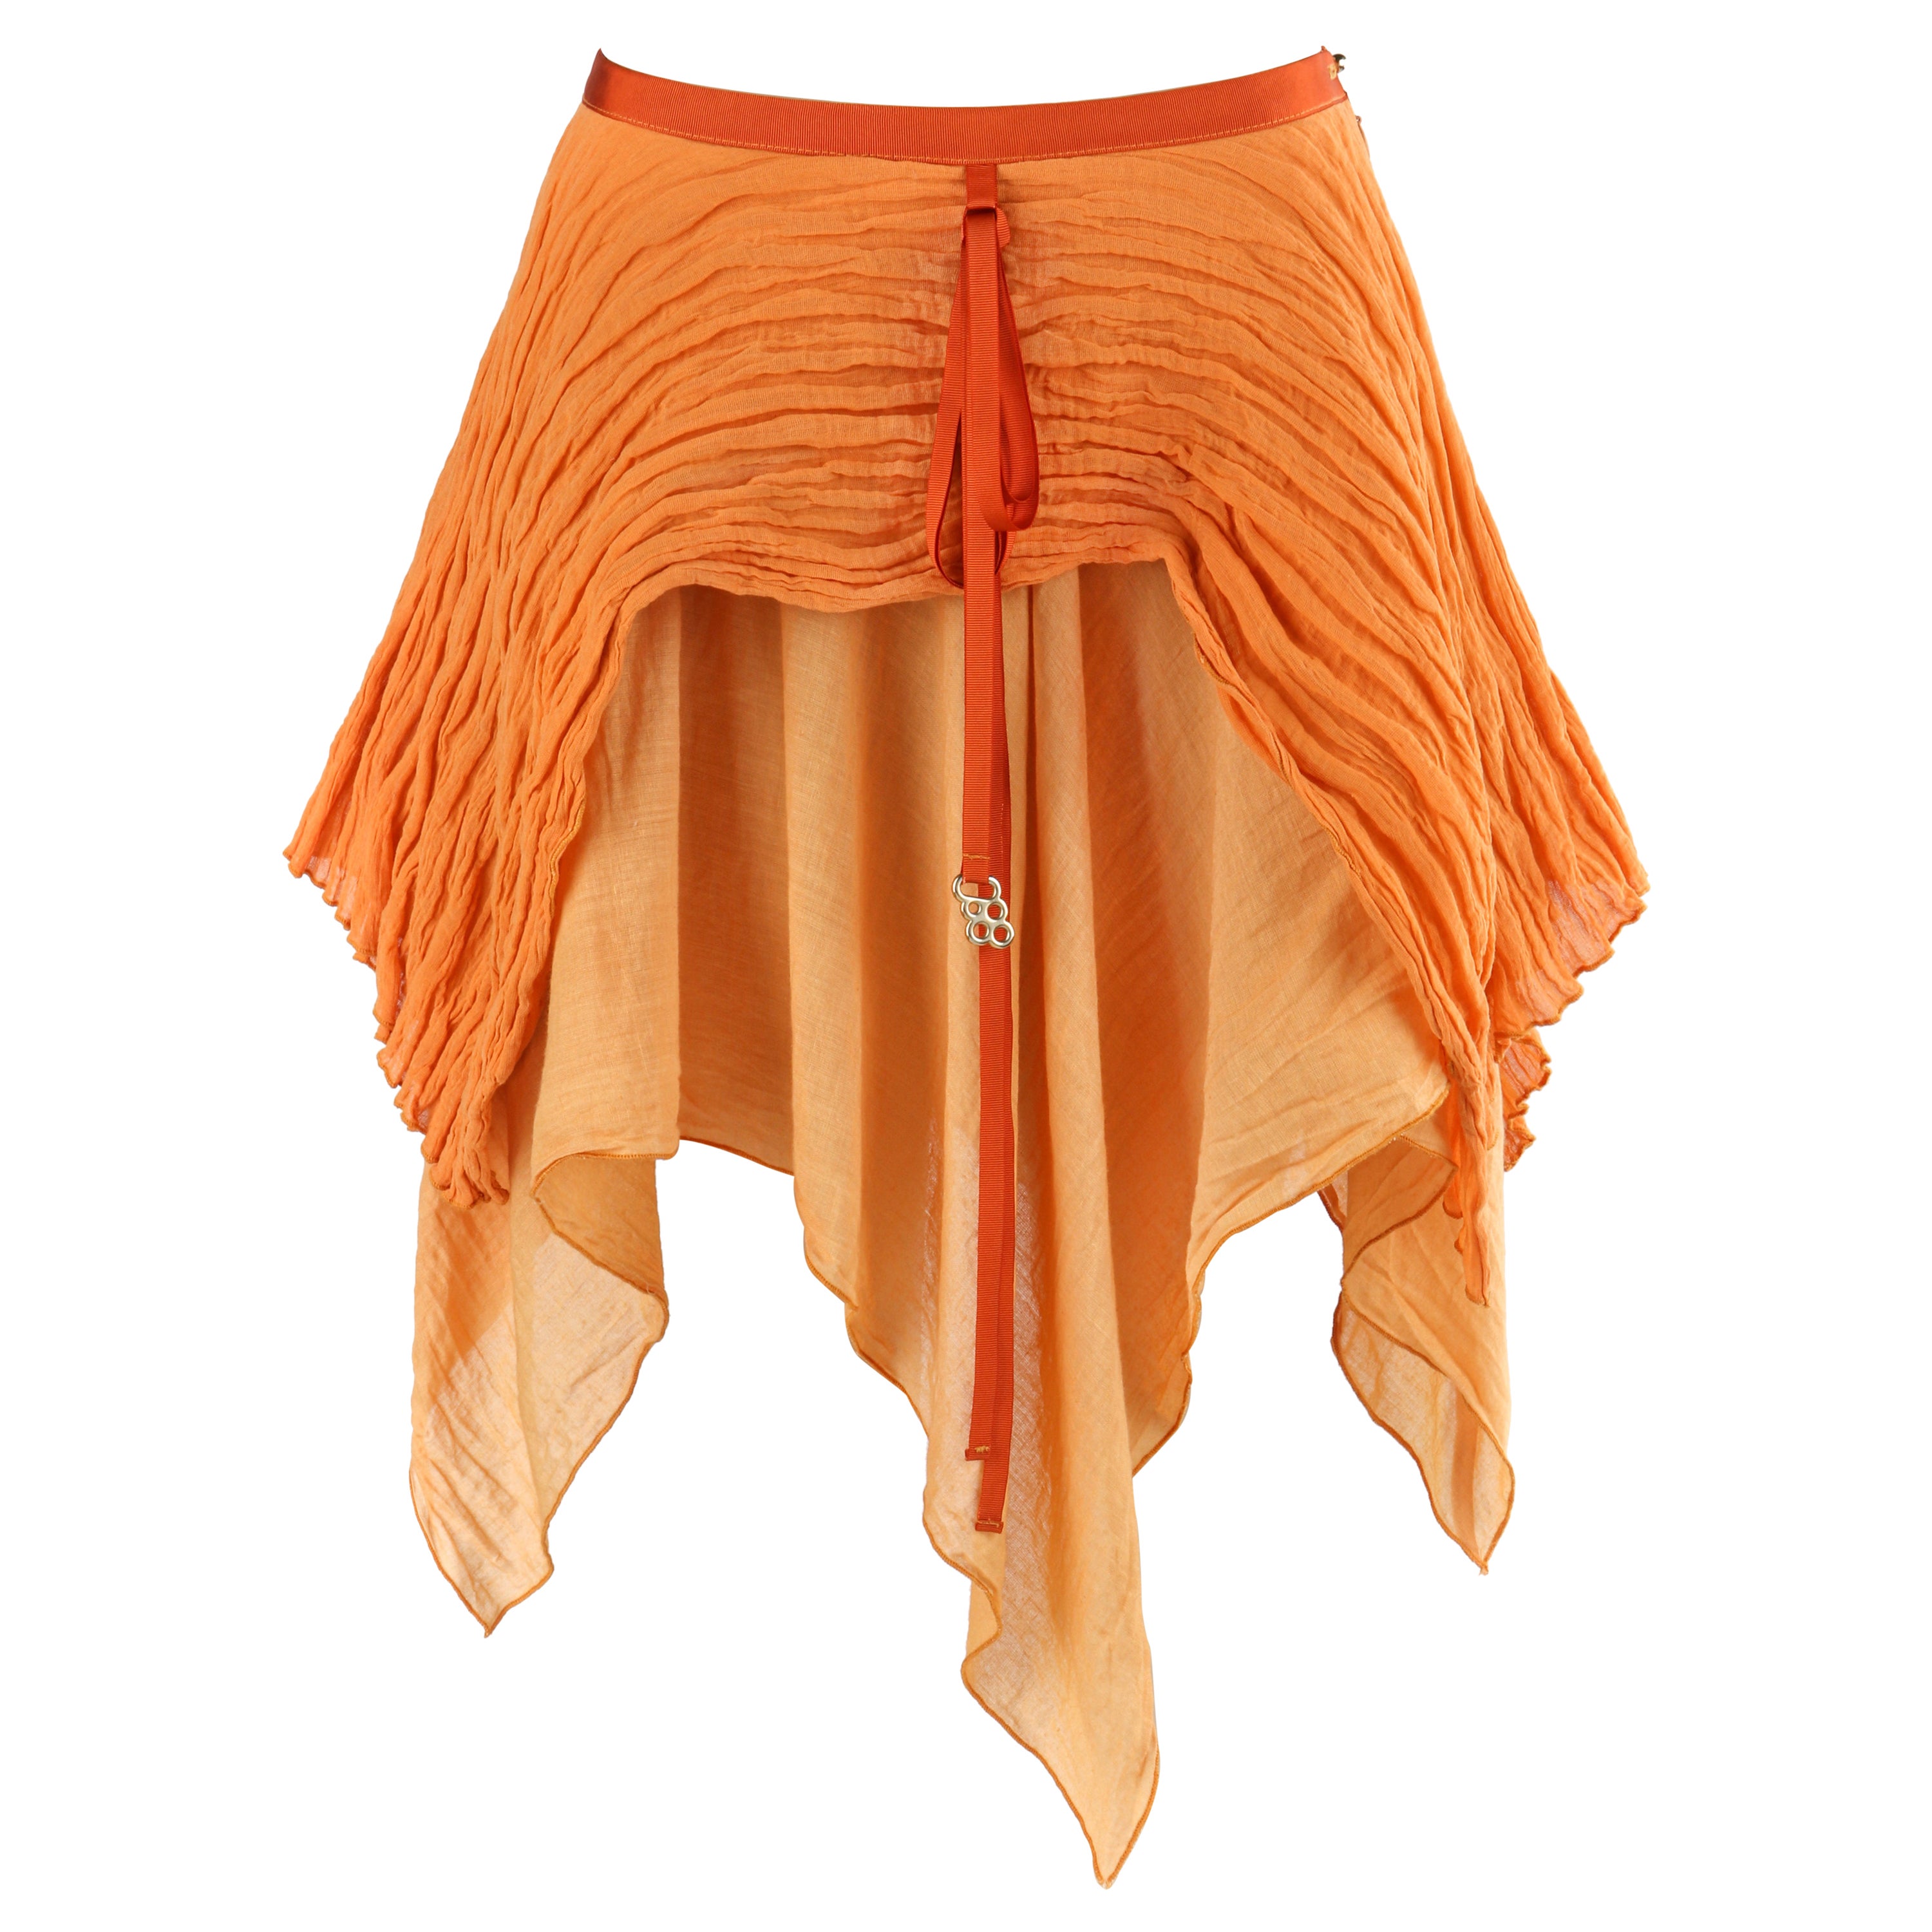 ALEXANDER McQUEEN S/S 1995 Two Toned Orange Layered Asymmetric Ruffled Skirt 